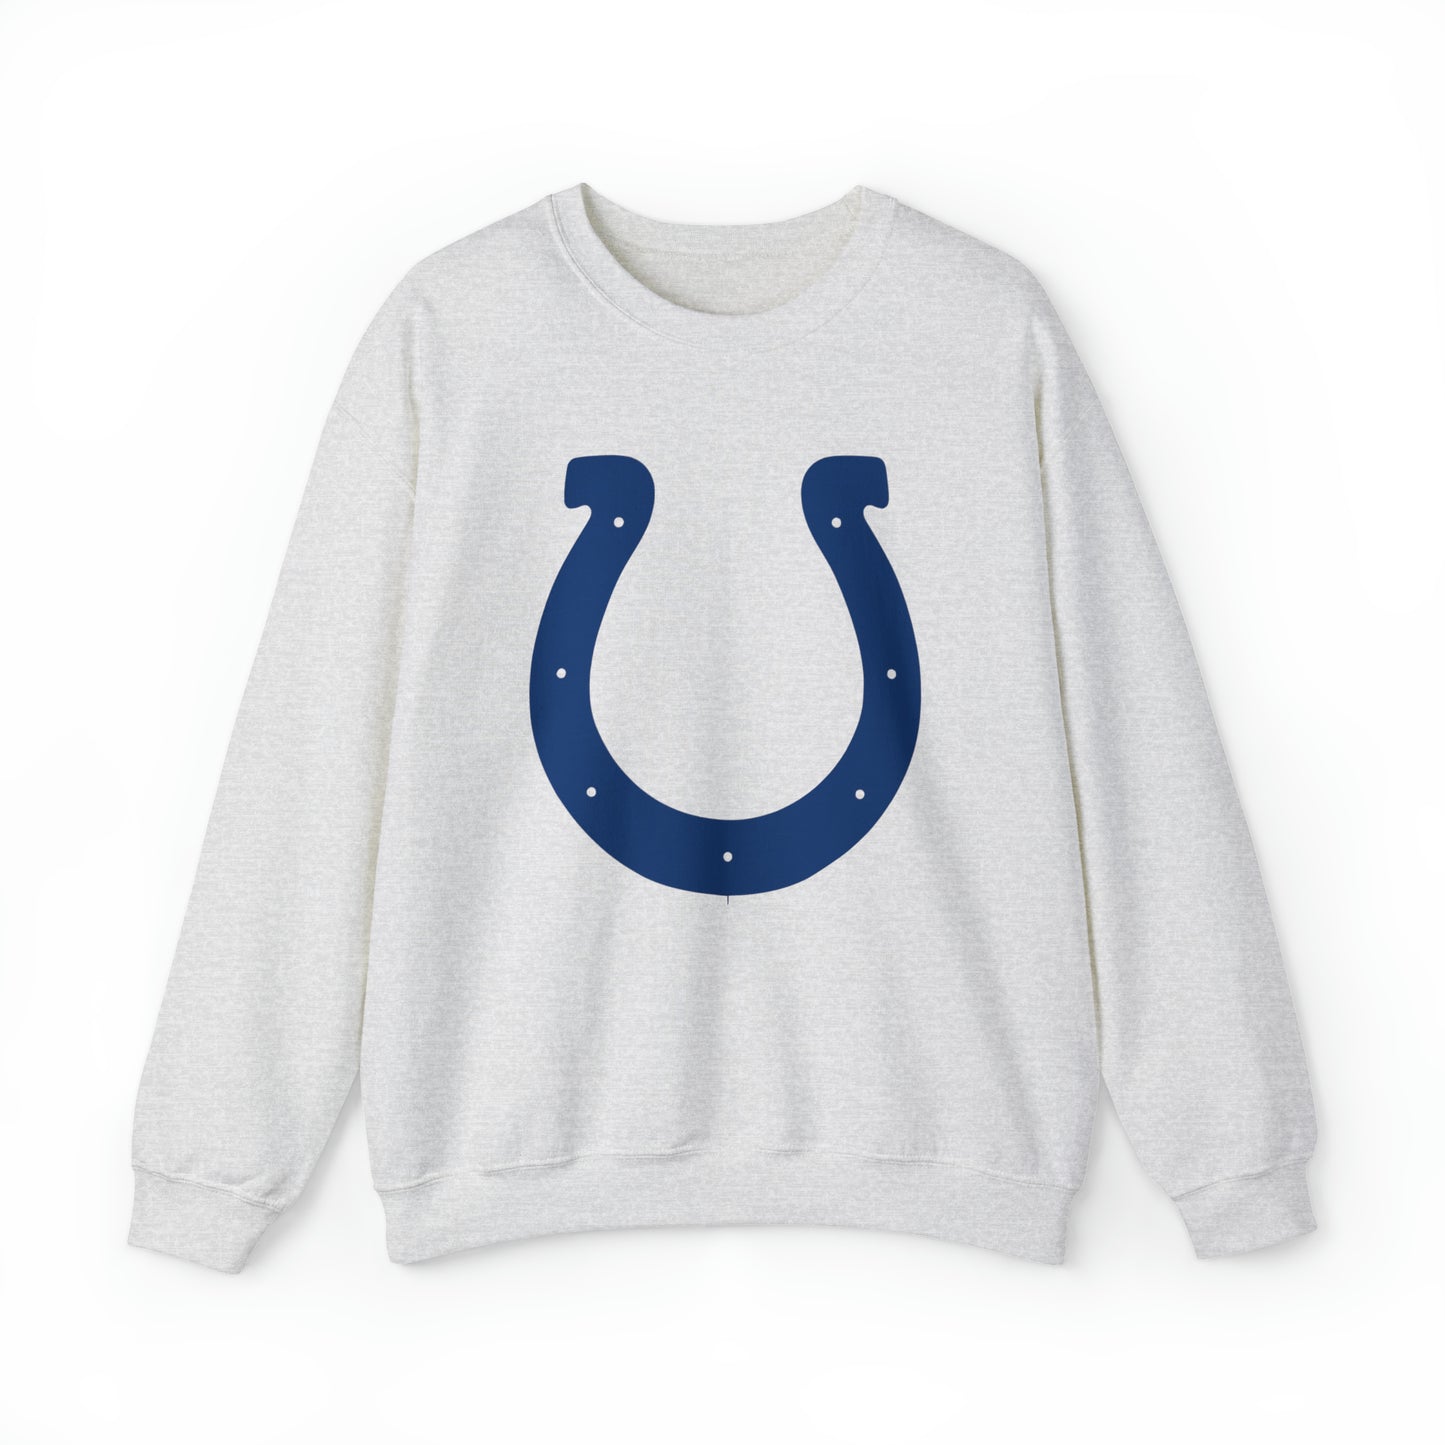 Vintage Indianapolis Colts Crewneck Sweatshirt - Retro Style Football Apparel - Men's & Women's - Design 3